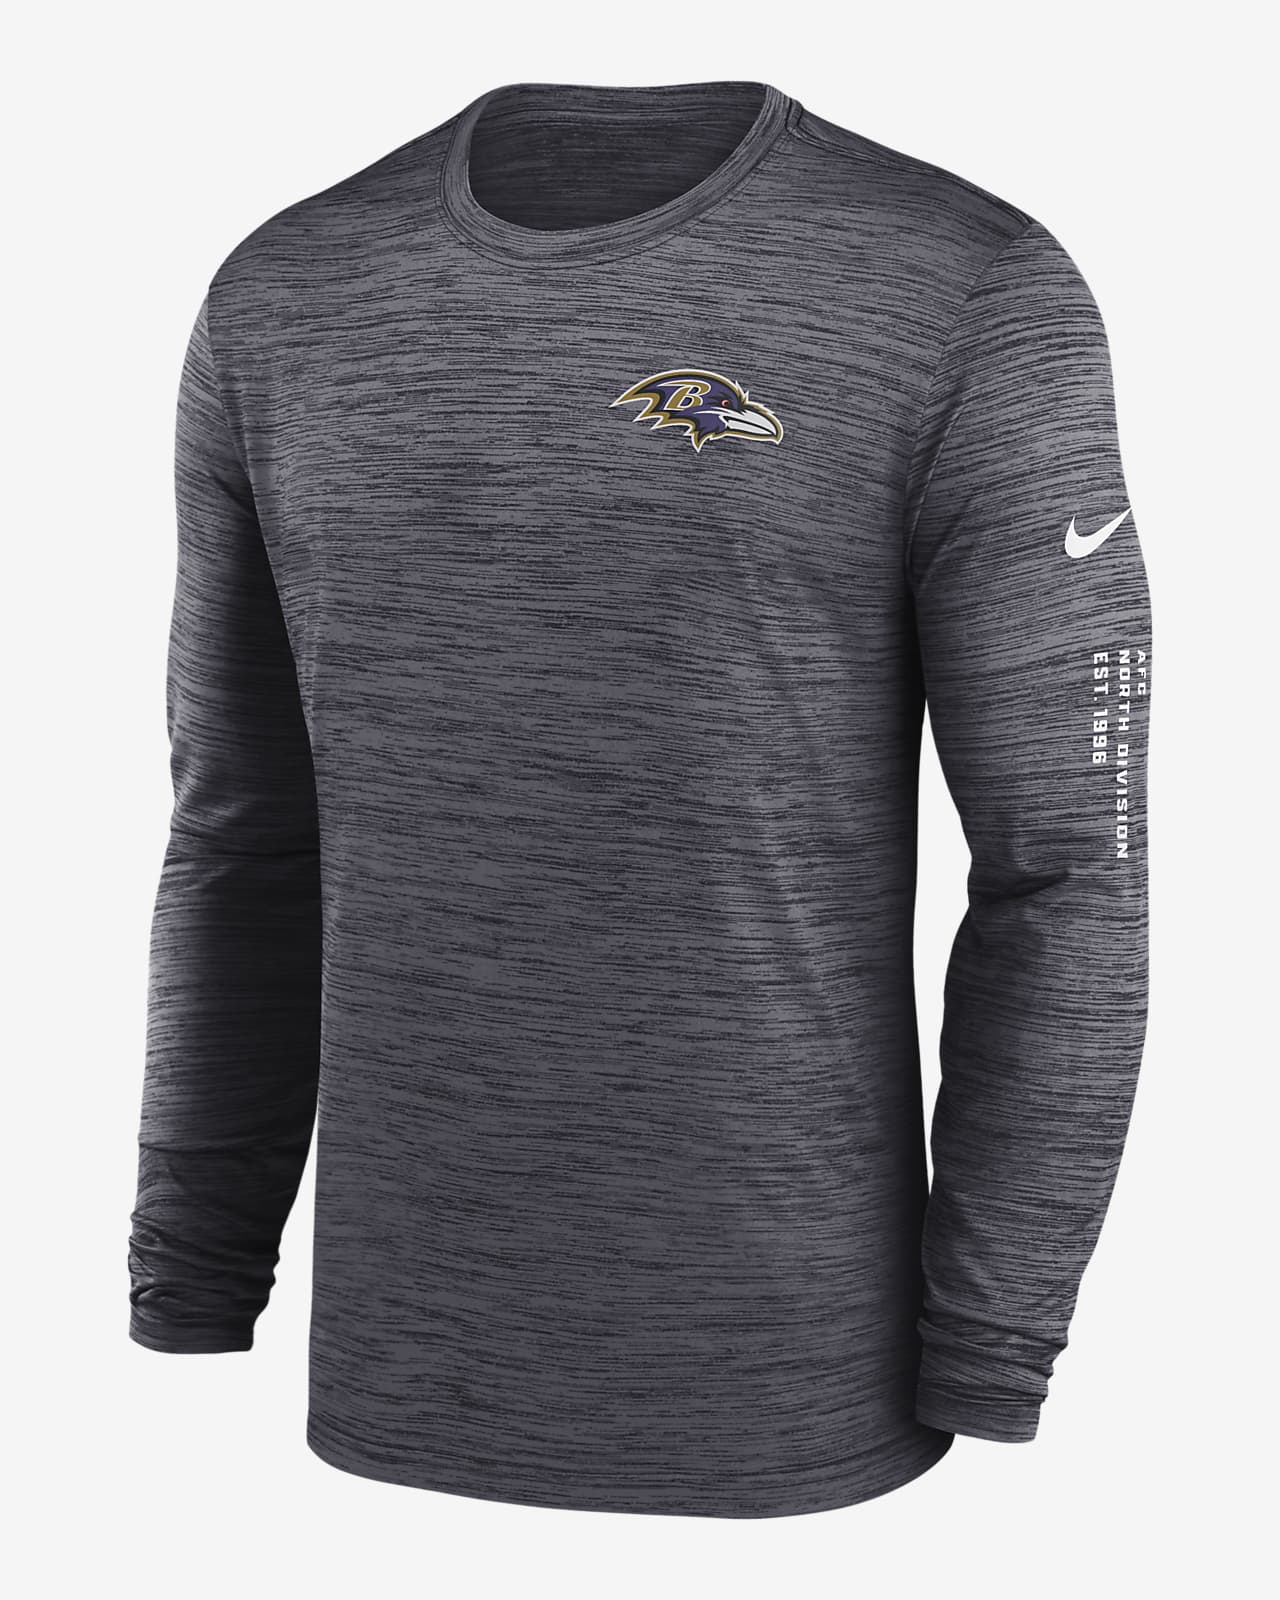 Men's Nike Black Baltimore Ravens Velocity Long Sleeve T-Shirt Size: Small